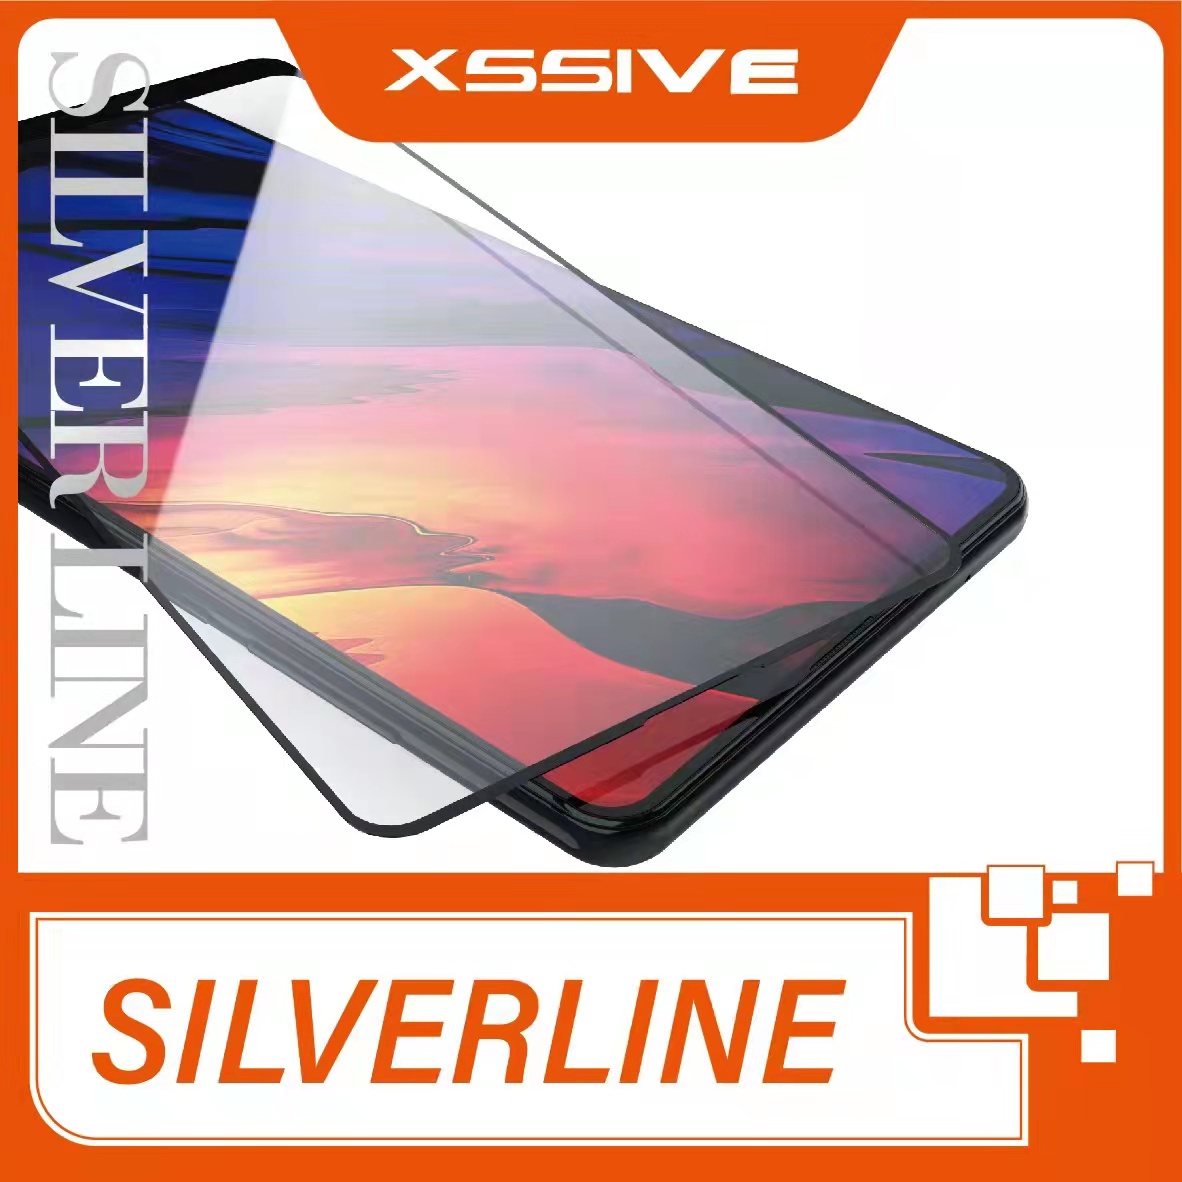 Artikelgroep - Smartphone - Silverline- 10%